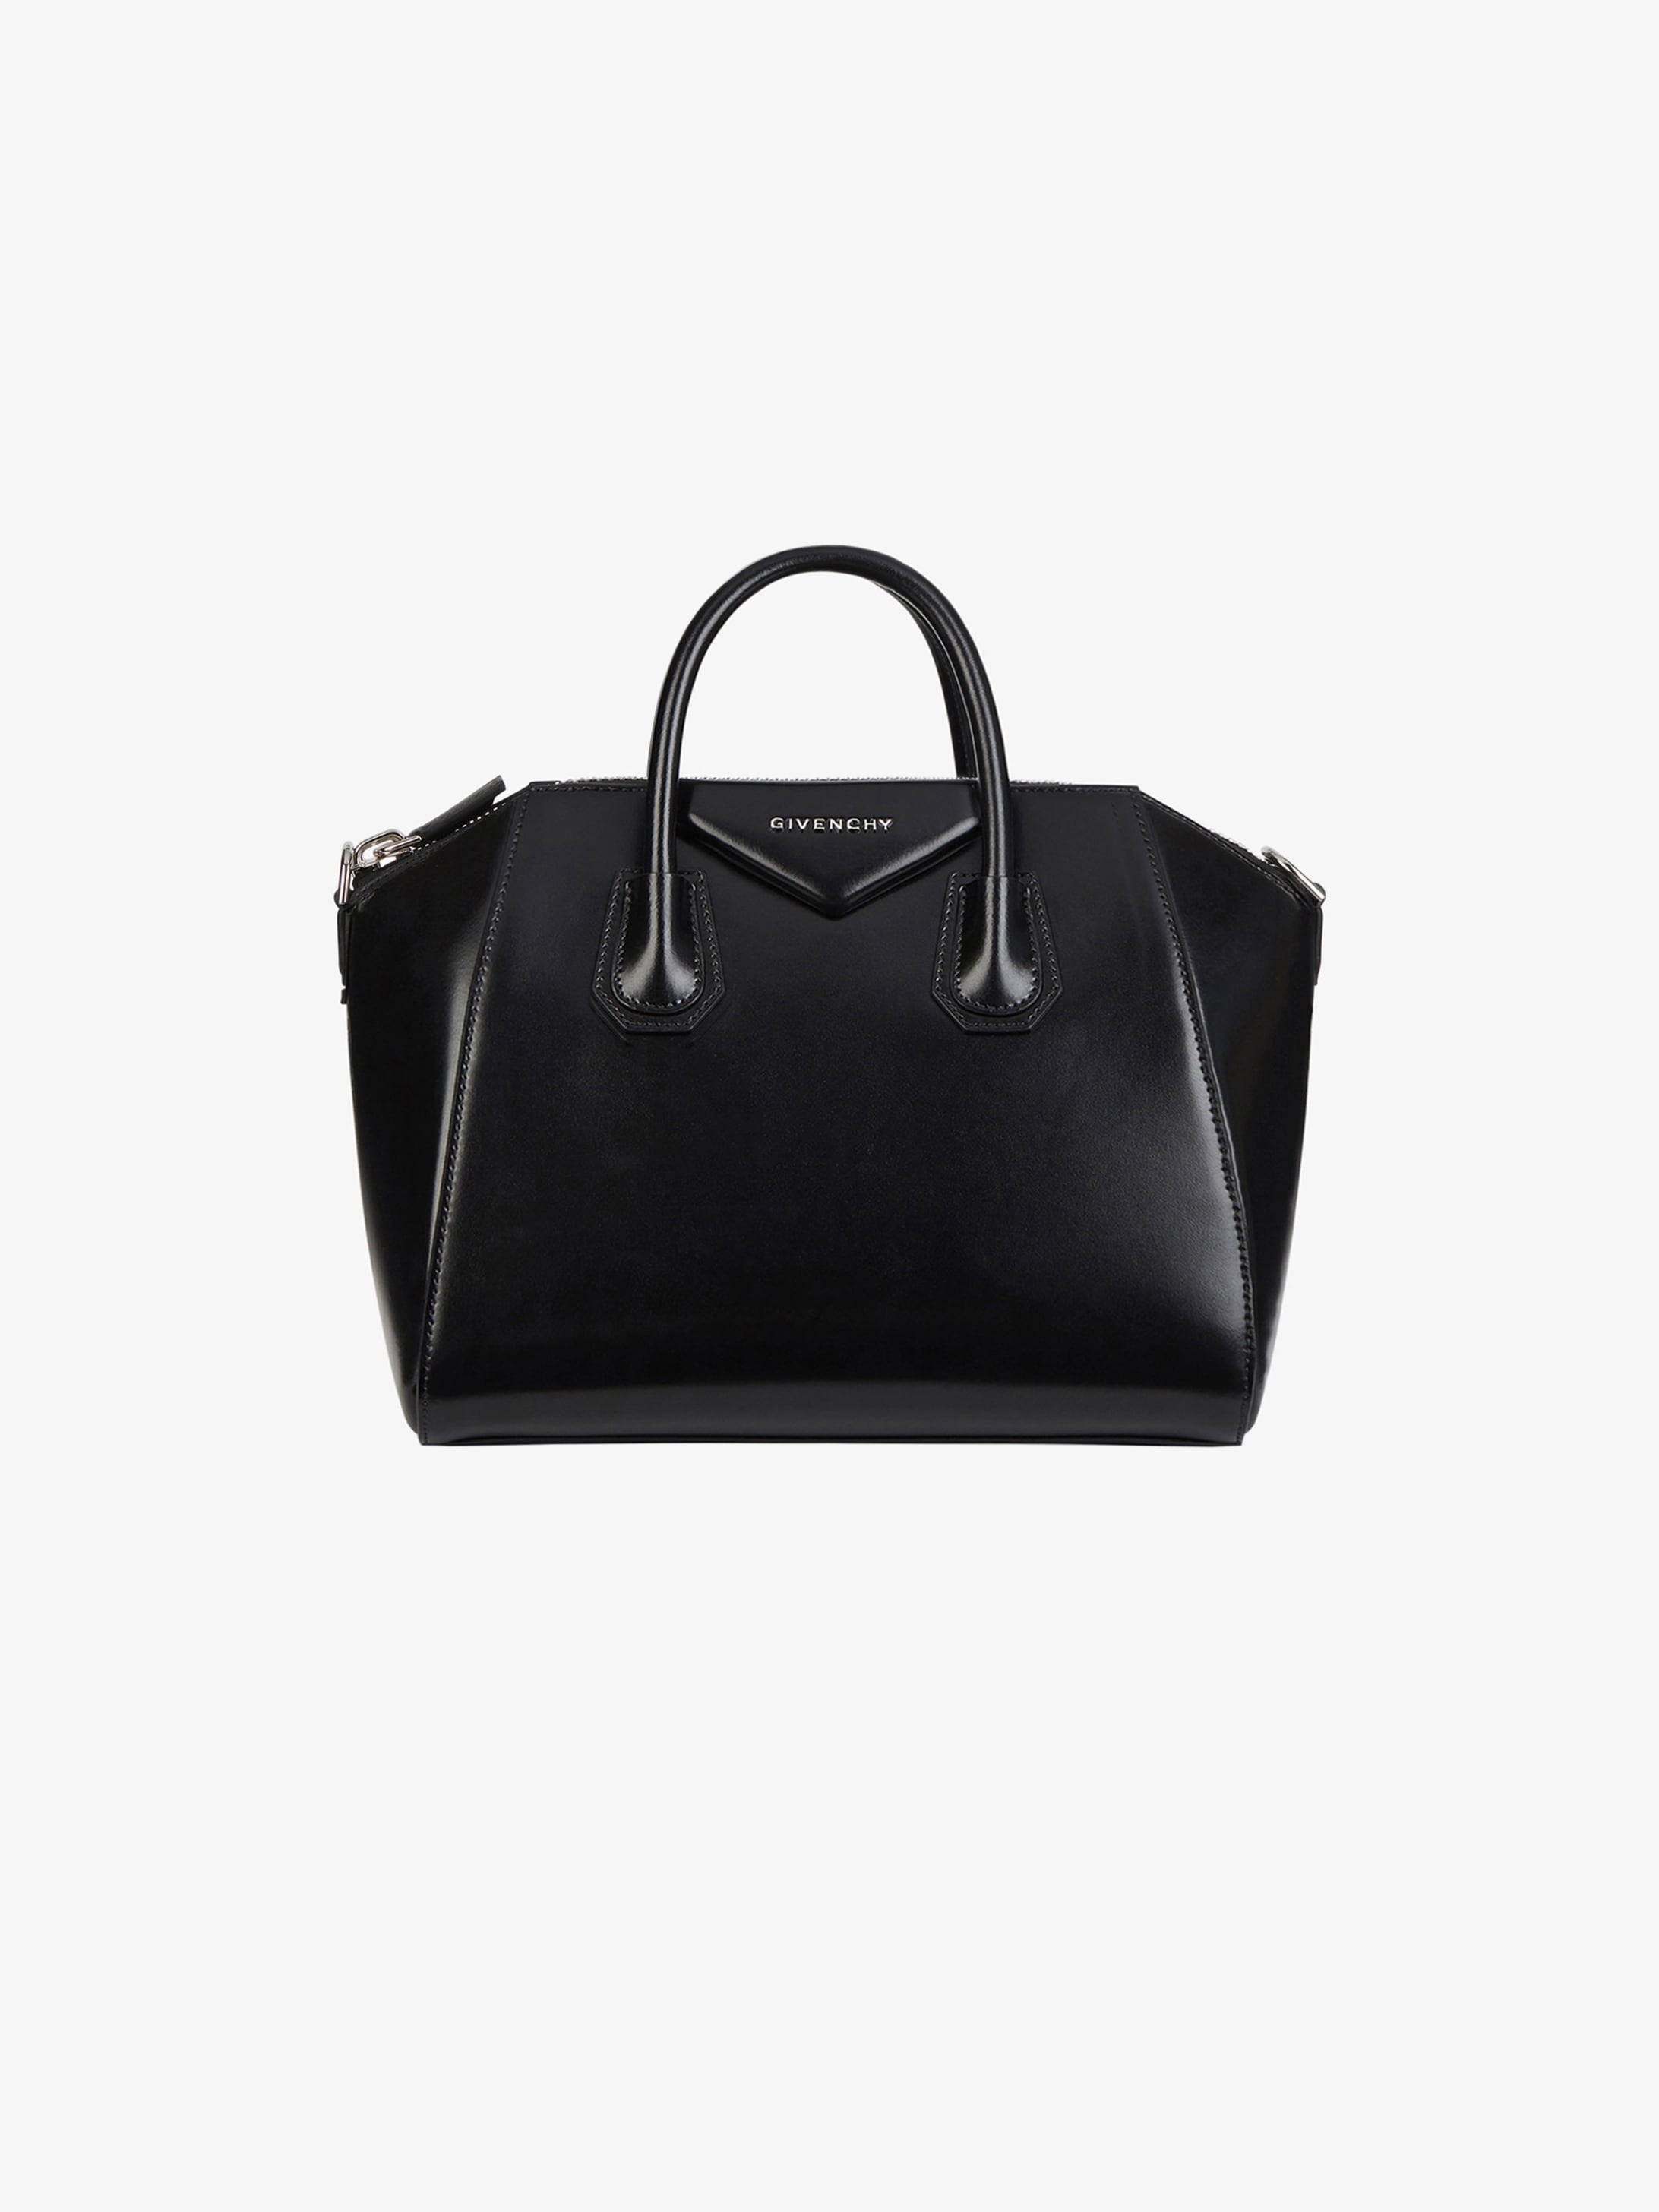 Givenchy Medium Antigona bag | GIVENCHY 